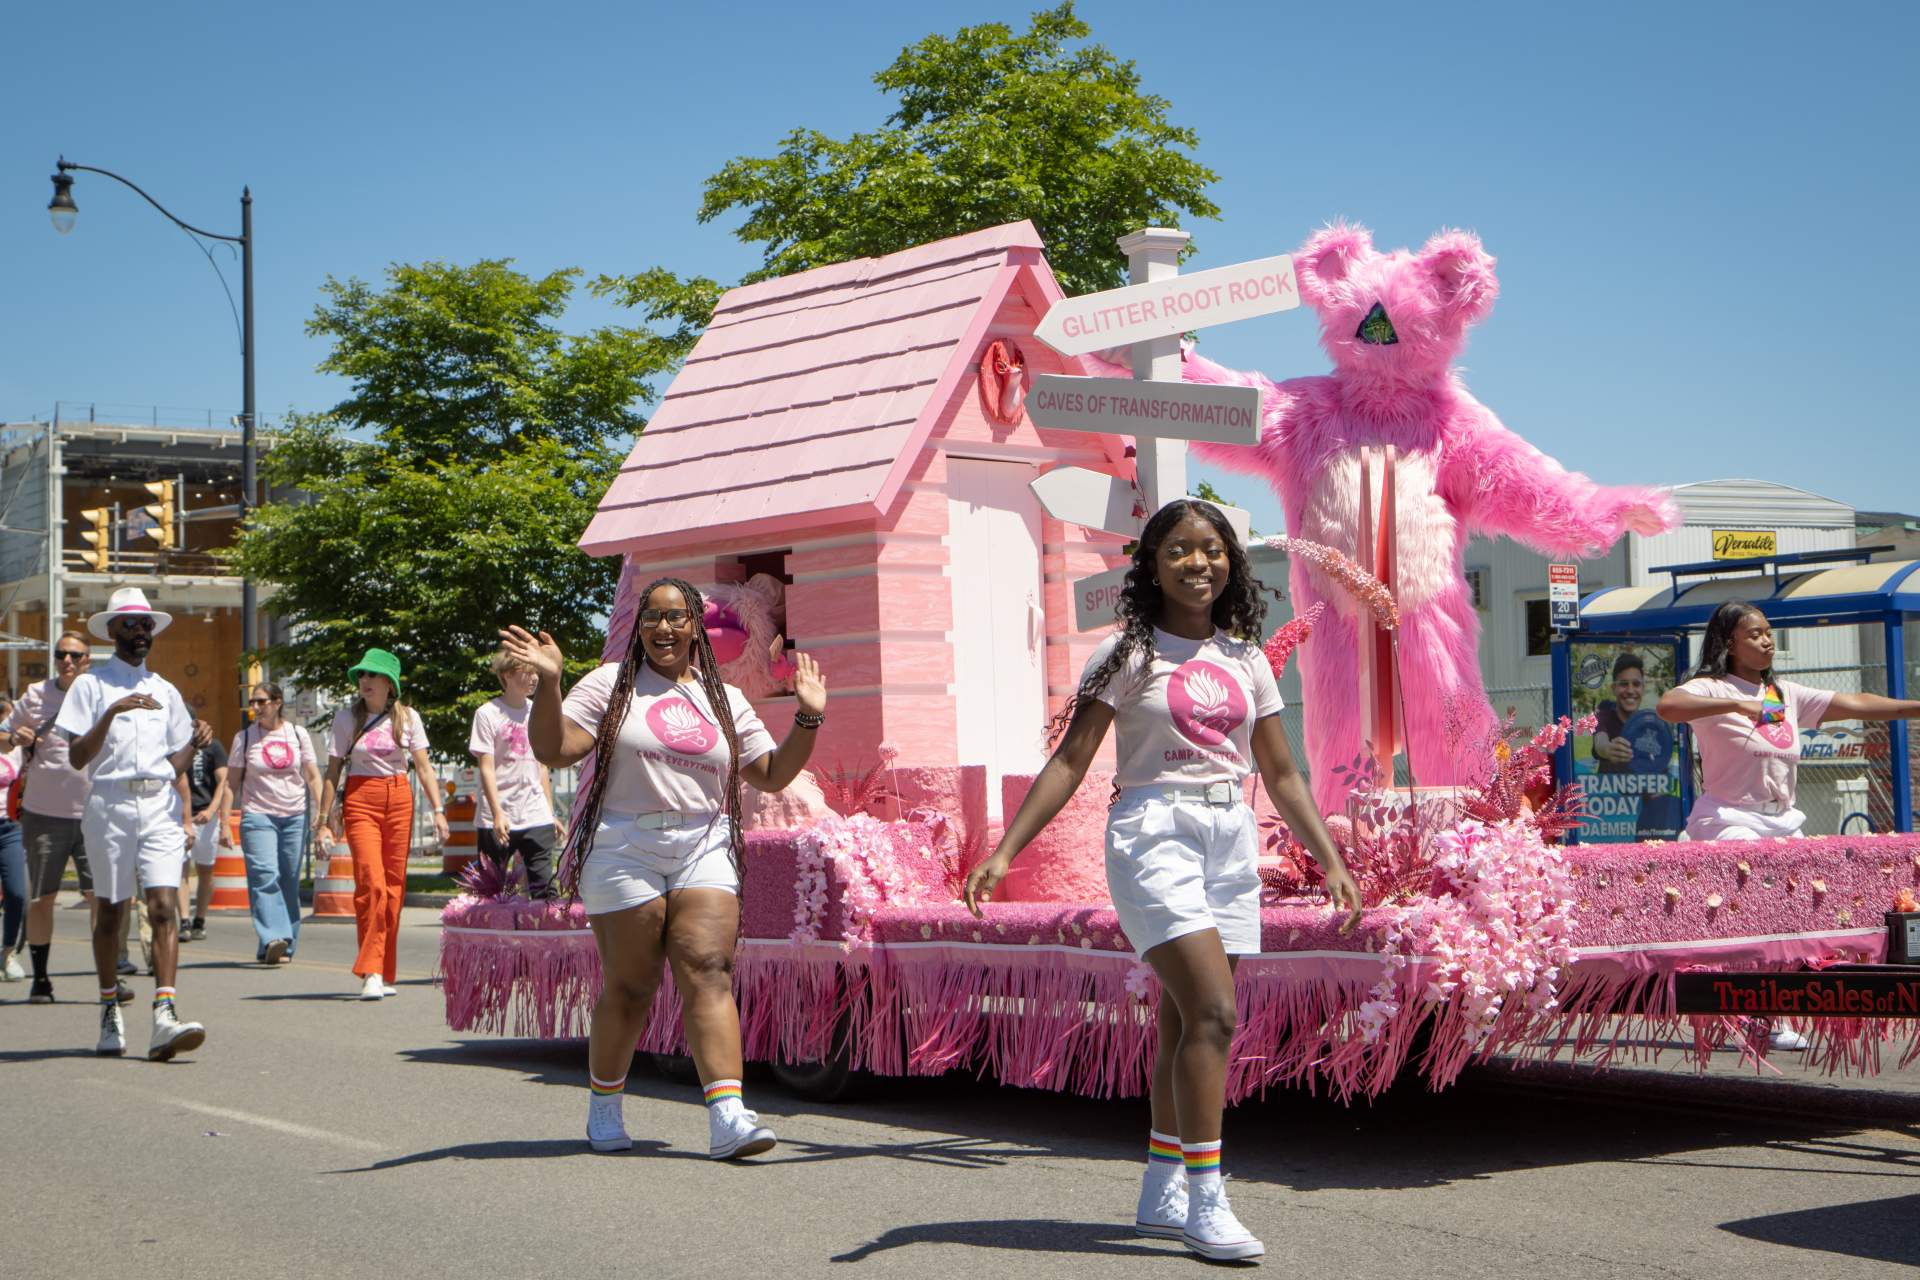 Pink Parade